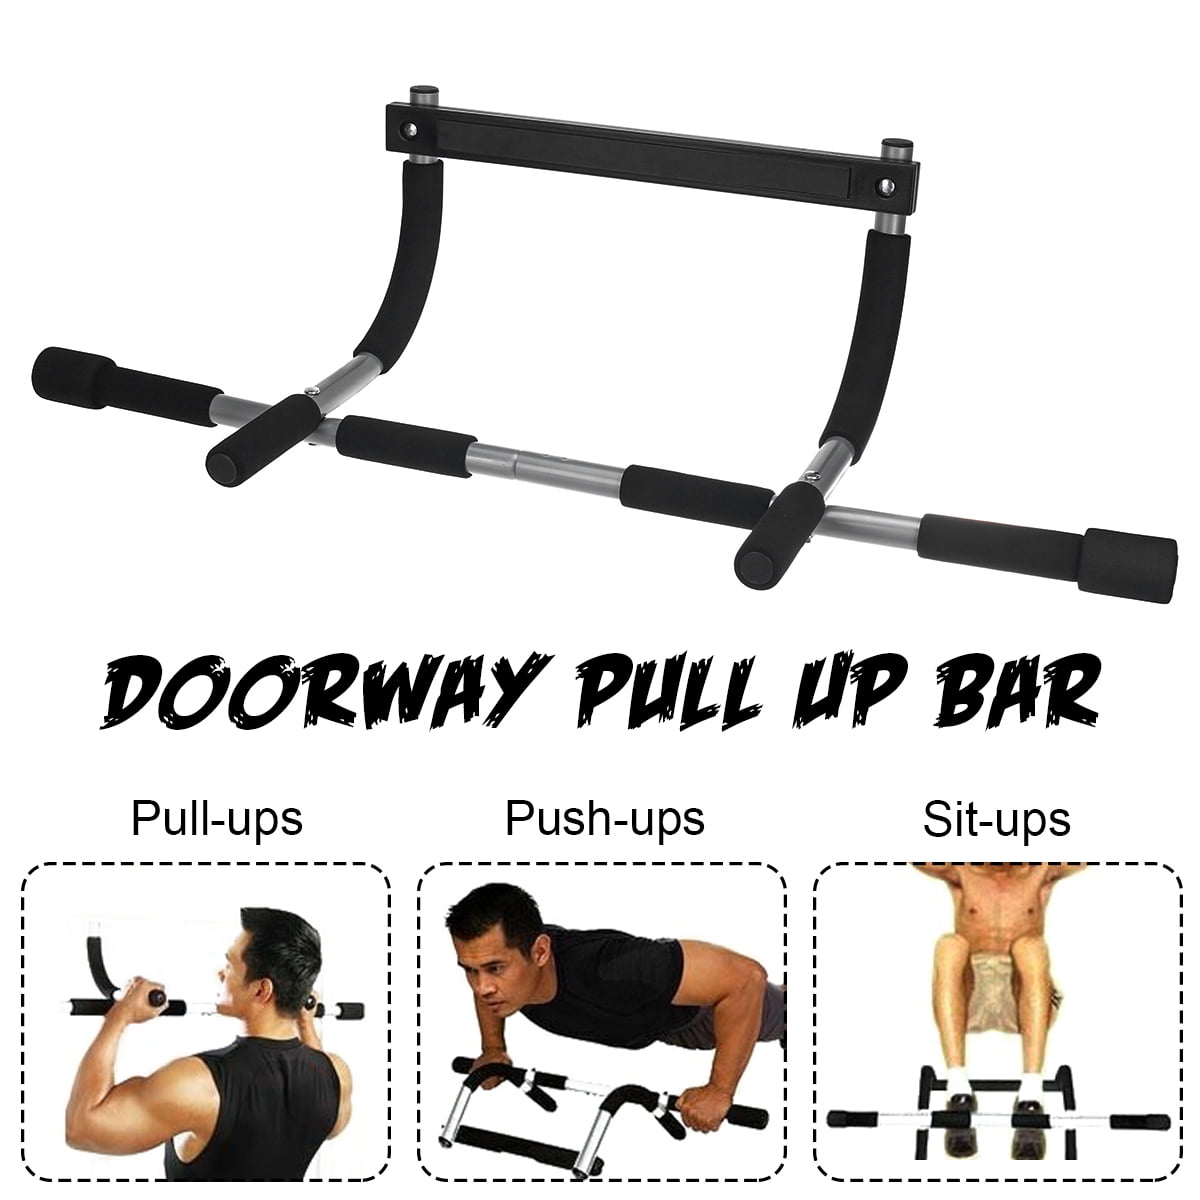 JIRTEMOT Portable Pull Up Bar Strength Training Pull-up Bars Pull Up Bar for Doorway Gym Bar Portable Fitness Bar Multi-Function Exercise Equipment Chin Up Bars 